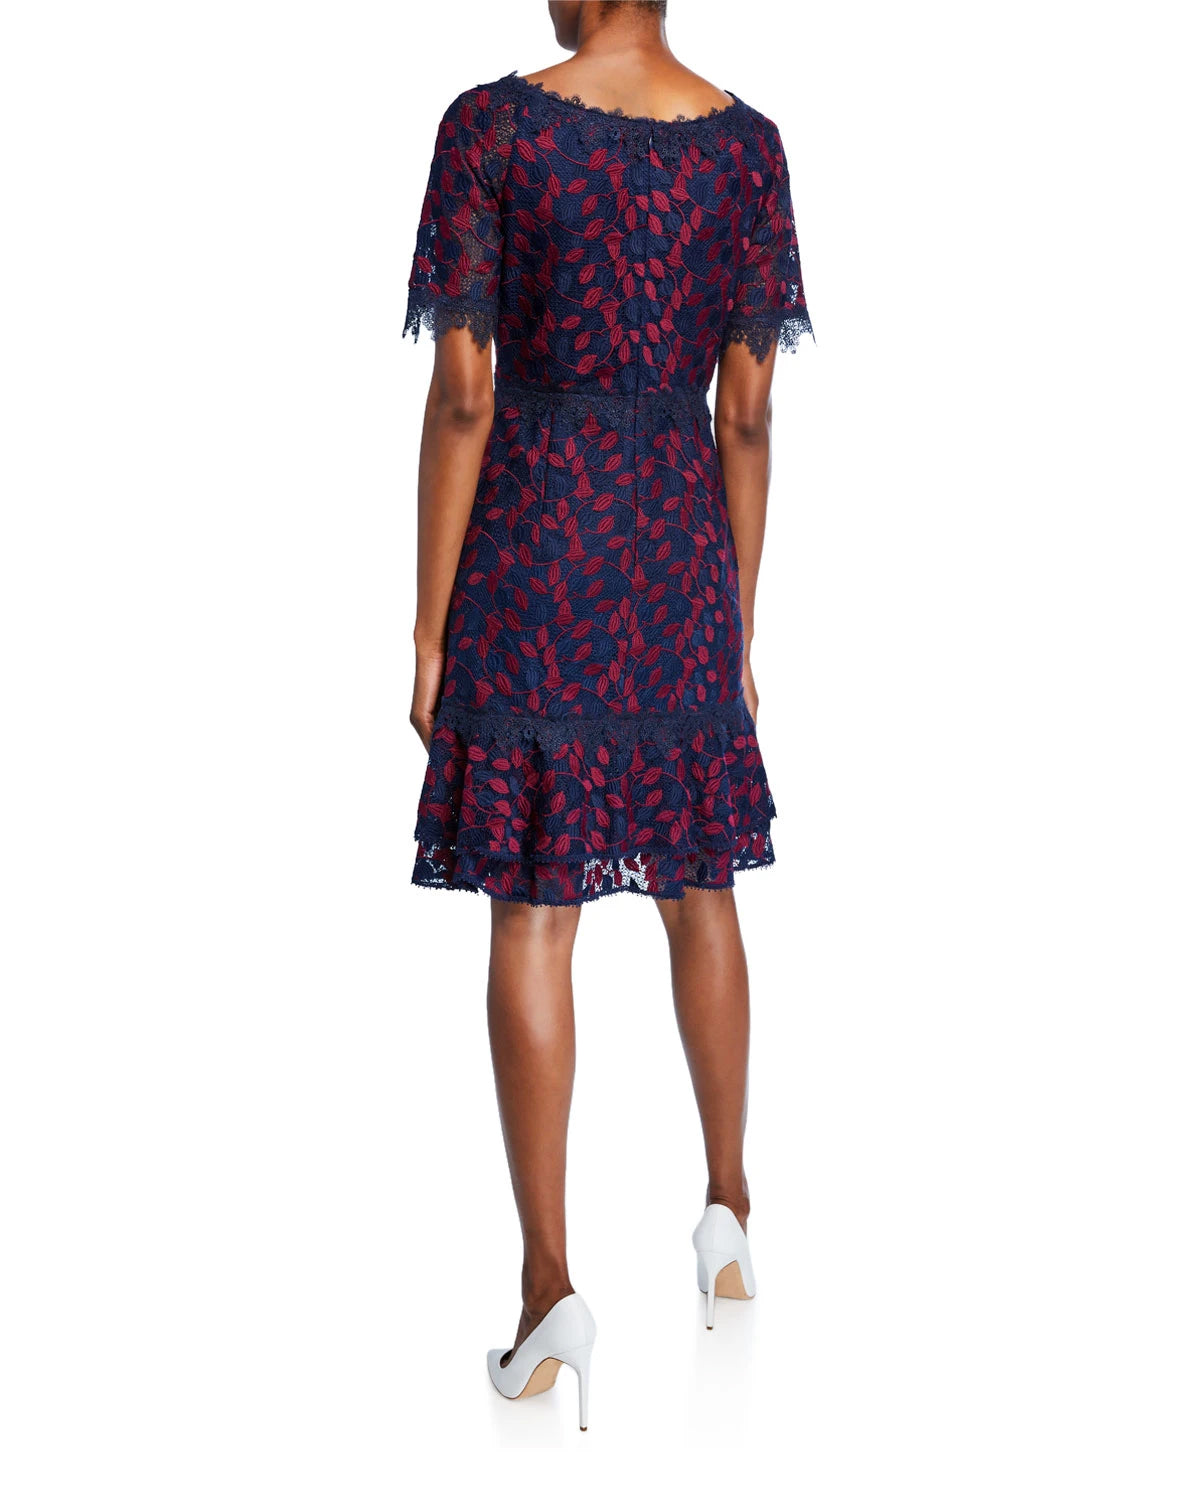 Buy Online Shani Two Tone Lace Dress in Navy/Purple for Women | Shani ...